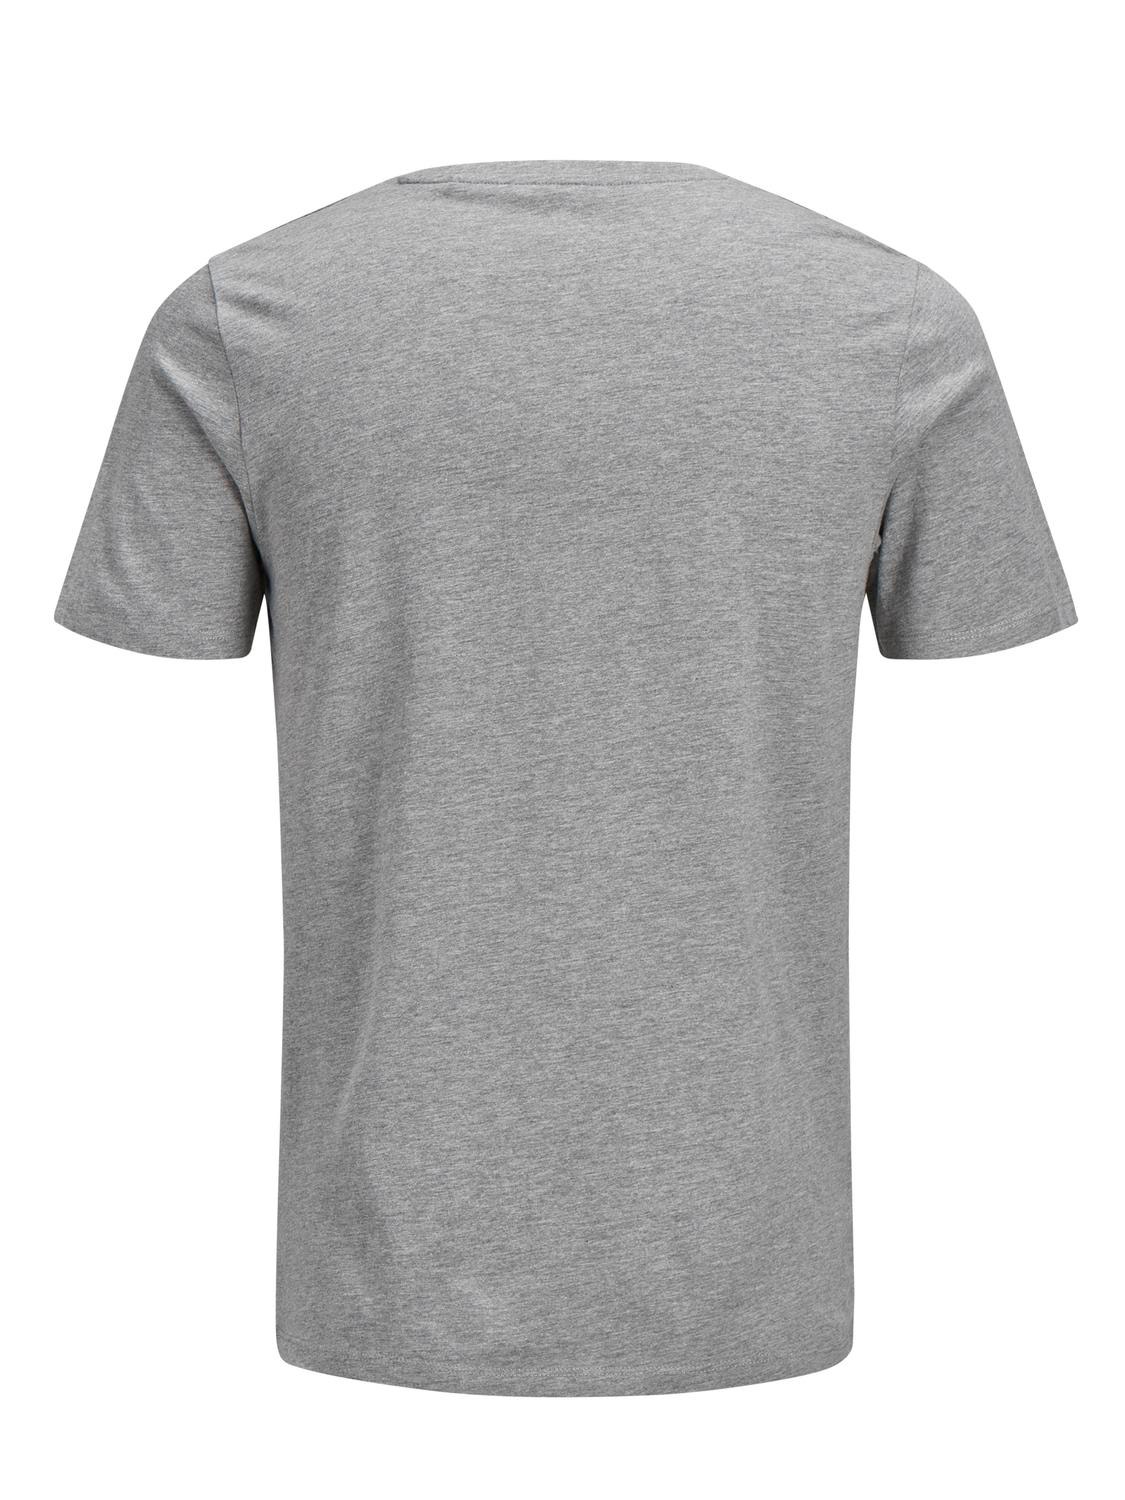 Jack & Jones Logo Rundhals T-shirt -Light Grey Melange - 12137126